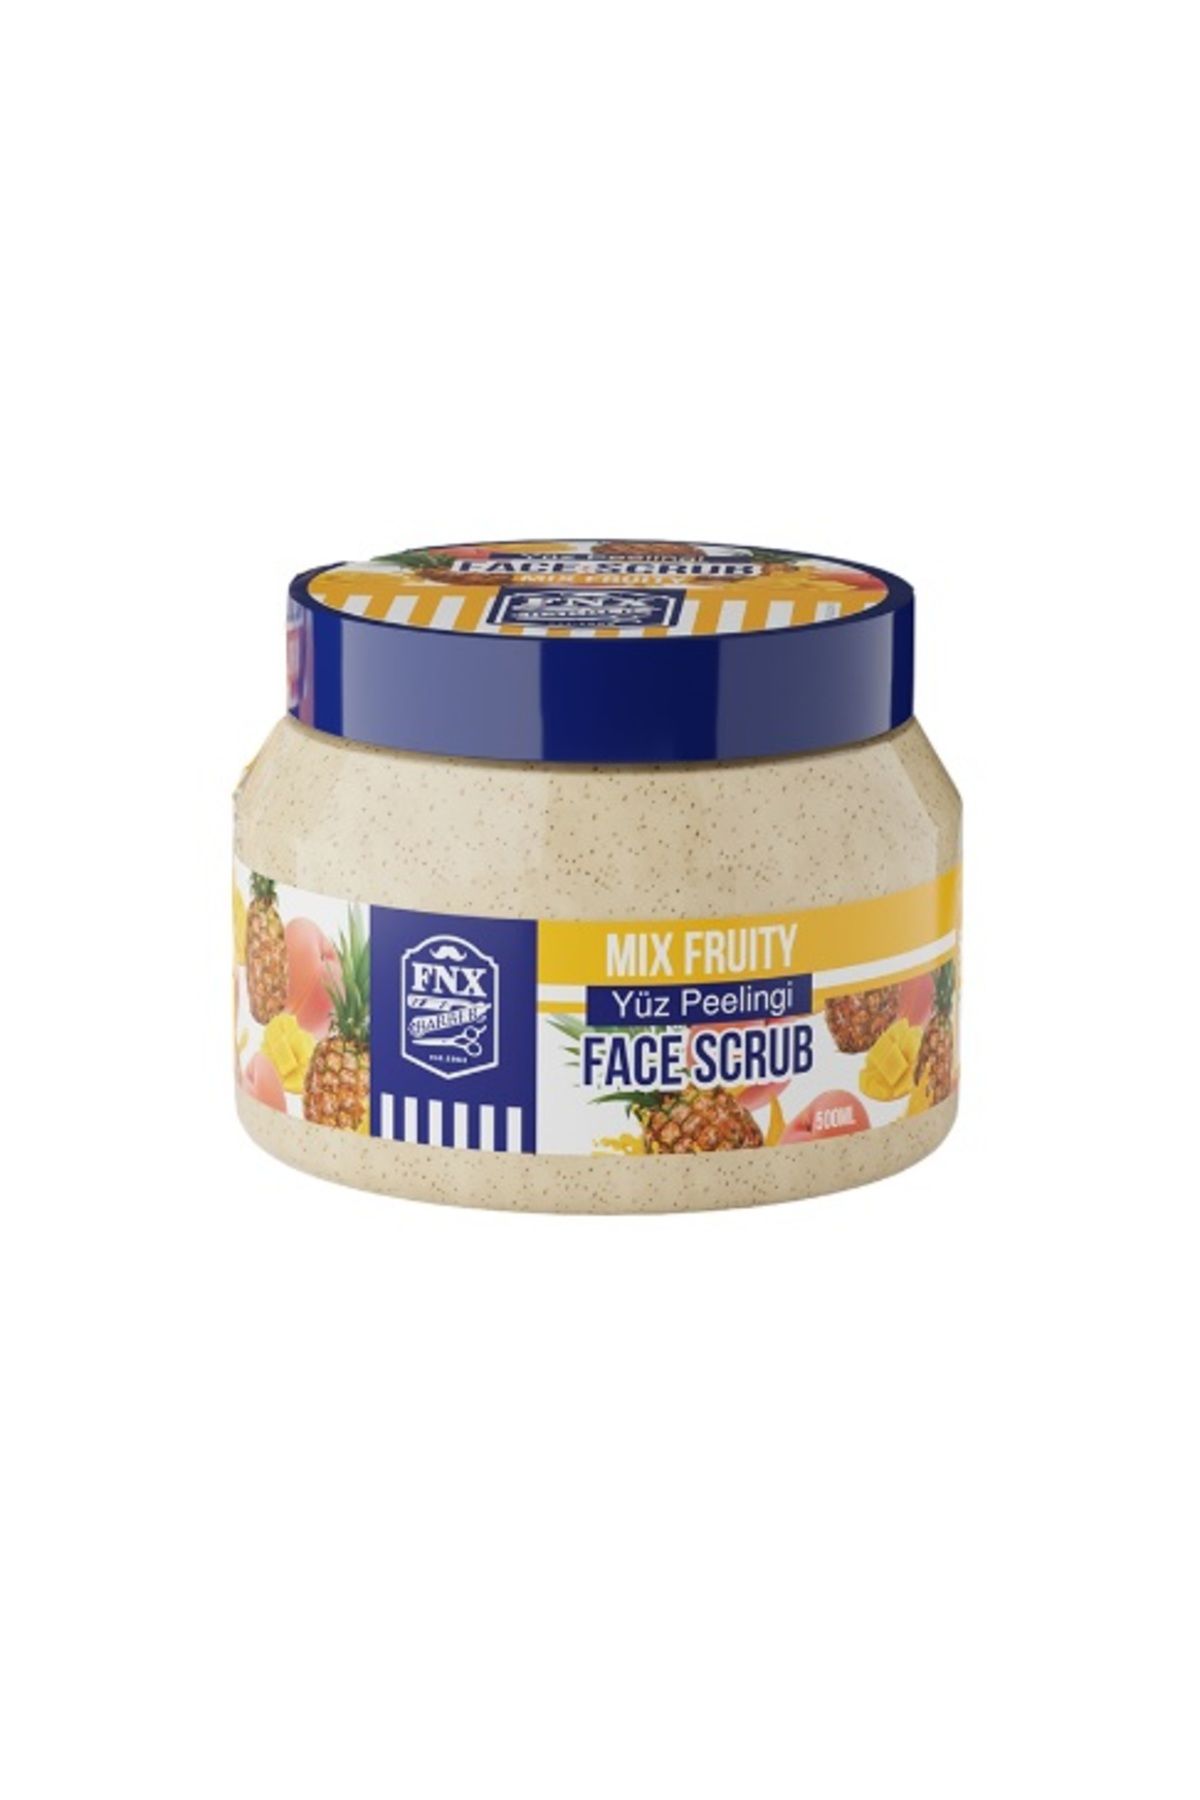 Genel Markalar Fnx Barber Face Scrub Peeling Fruit Mix 500 ml